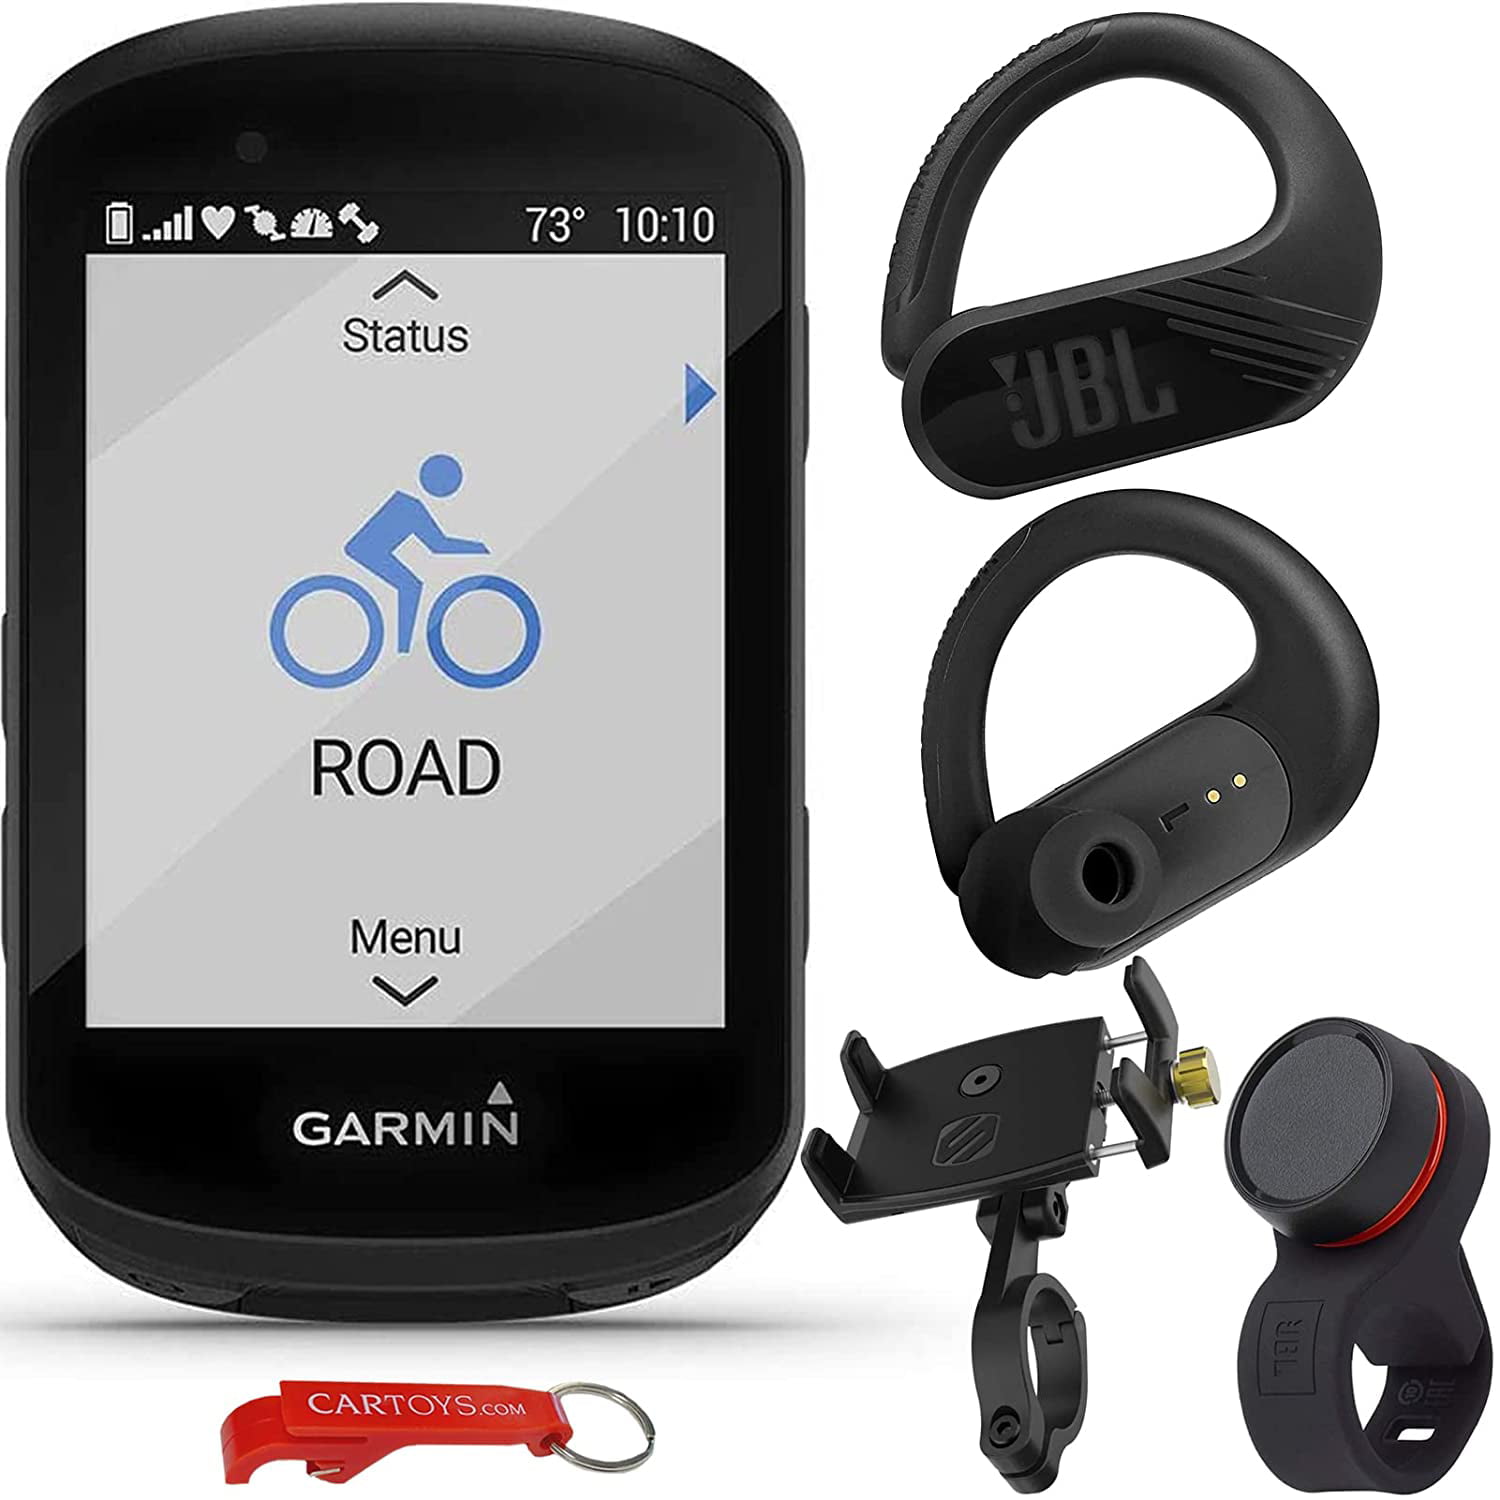 Garmin Edge 530 Bike Computer Trek Tunes Bundle with JBL Bluetooth Headphones, Remote, and Phone Holder. Road & GPS Cycling Navigator, Dynamic Performance Popularity Routing Walmart.com